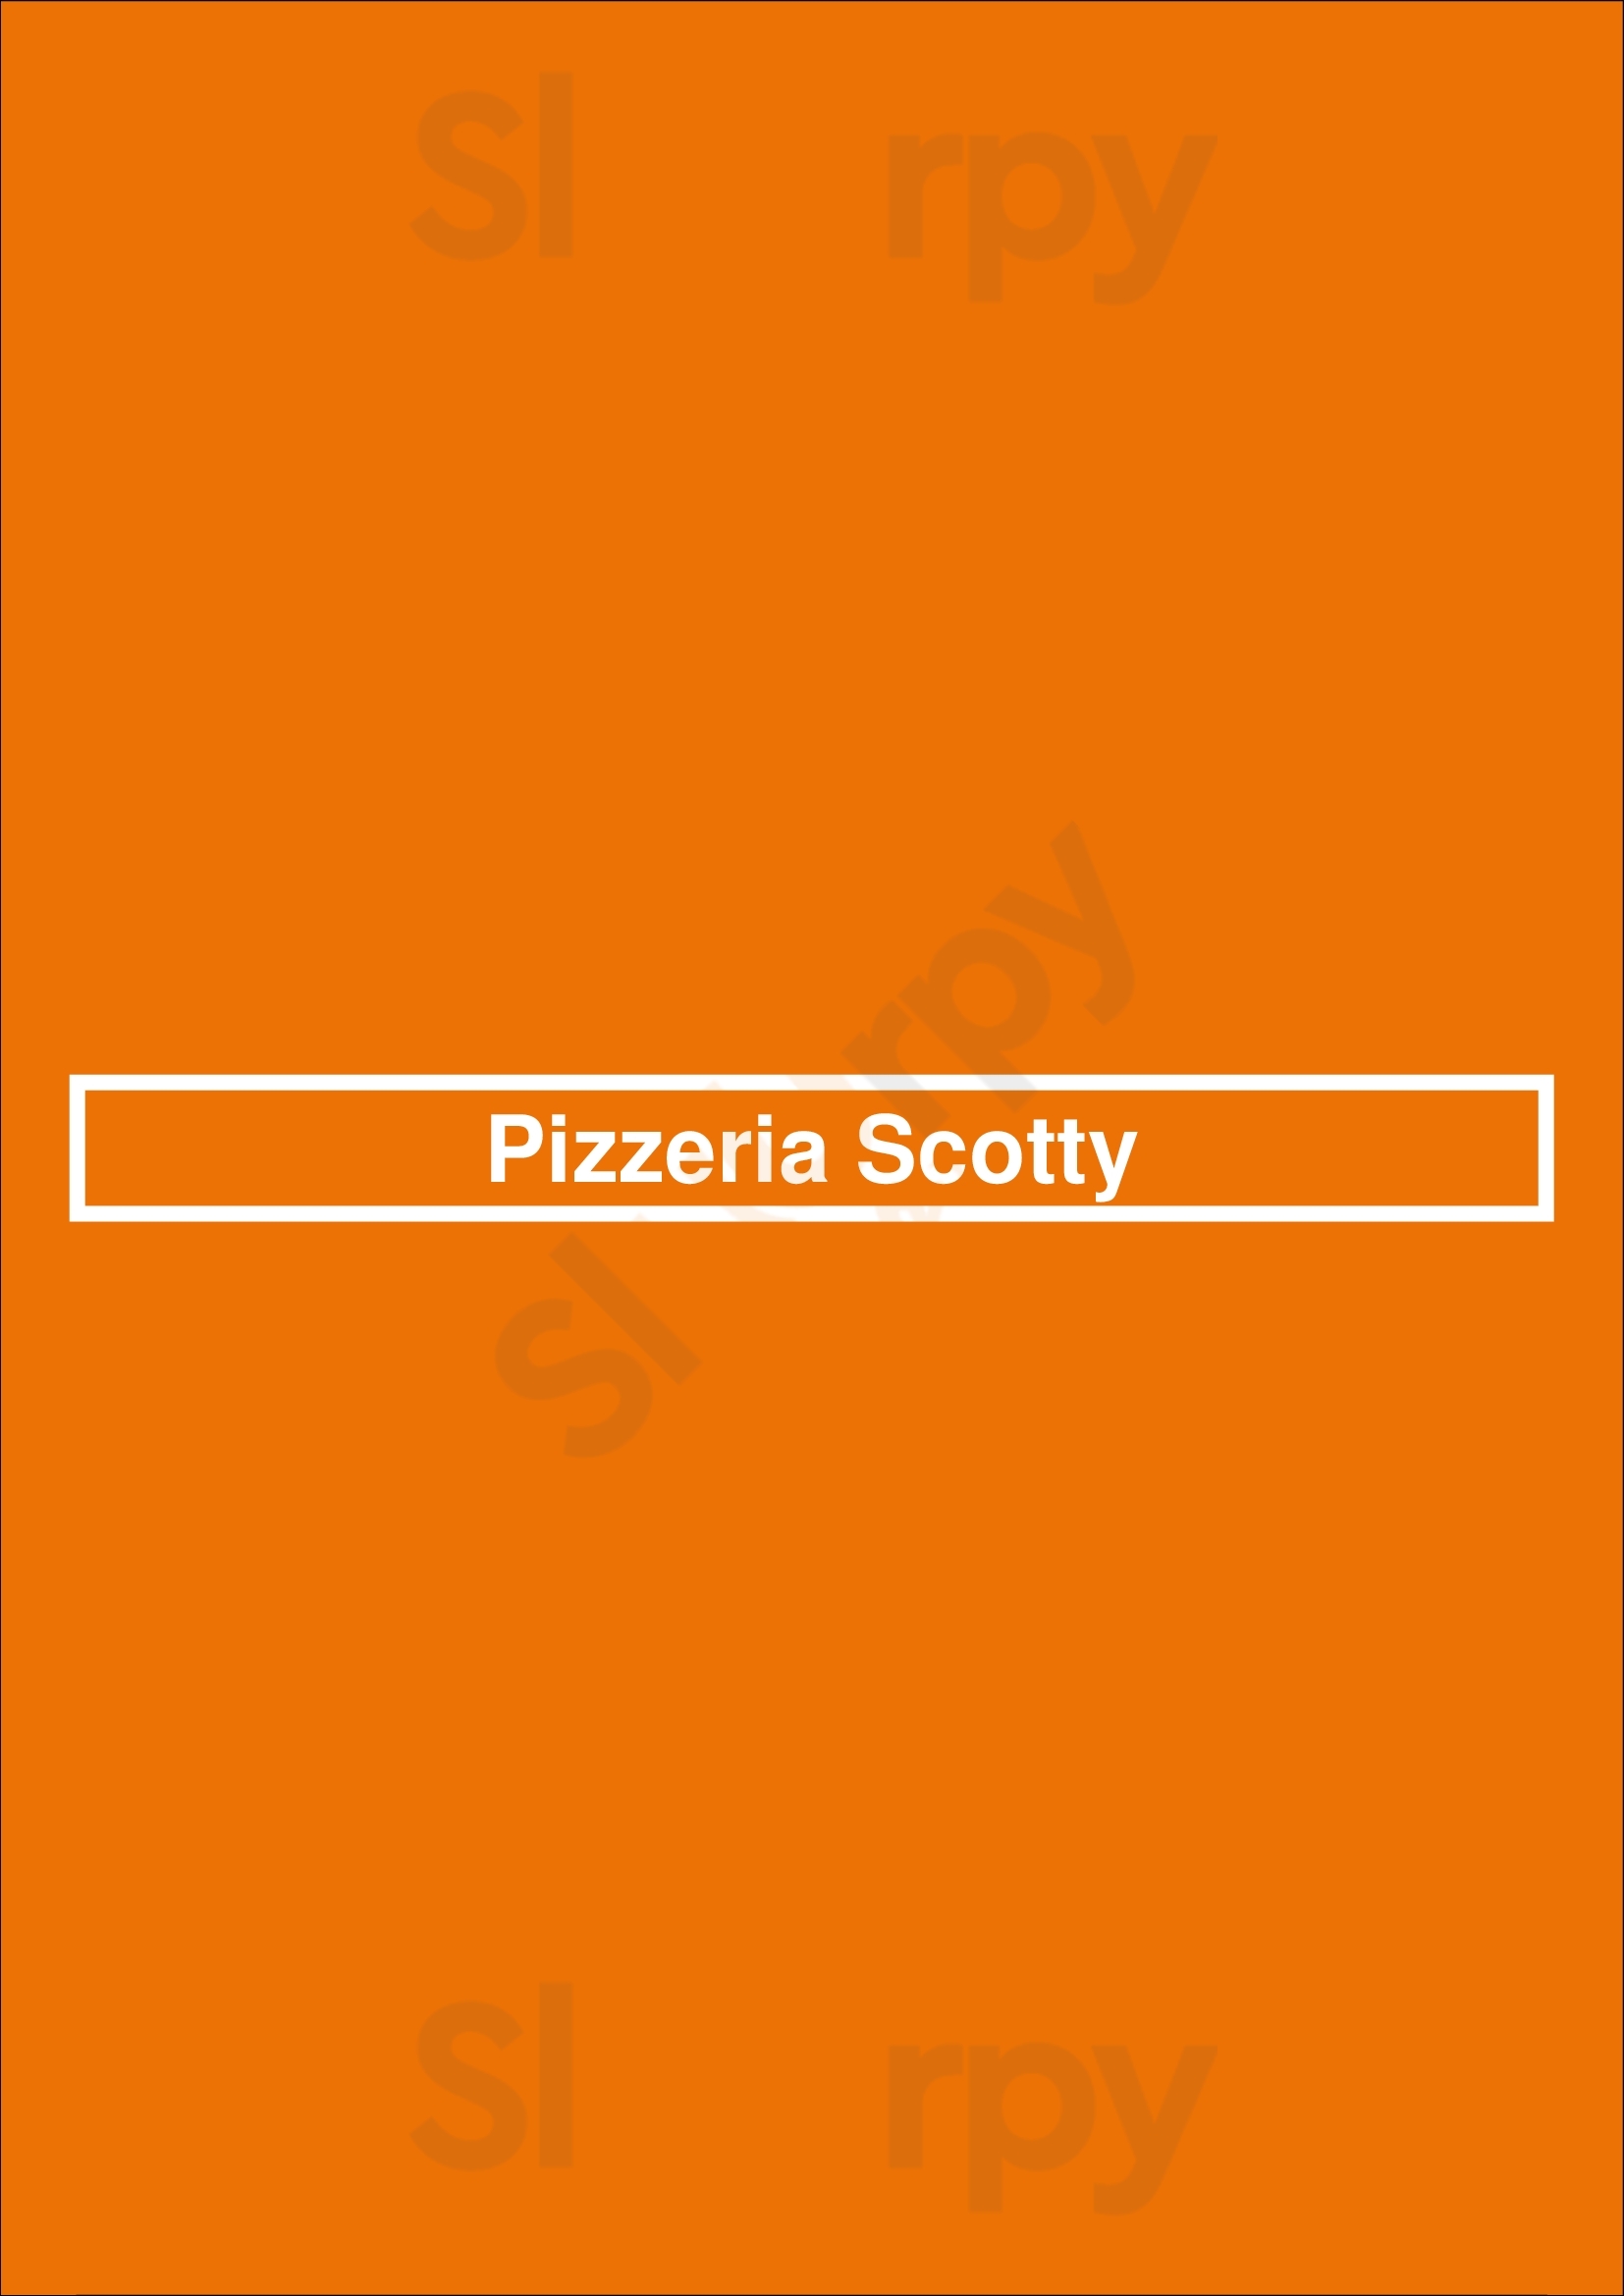 Pizzeria Scotty Milwaukee Menu - 1